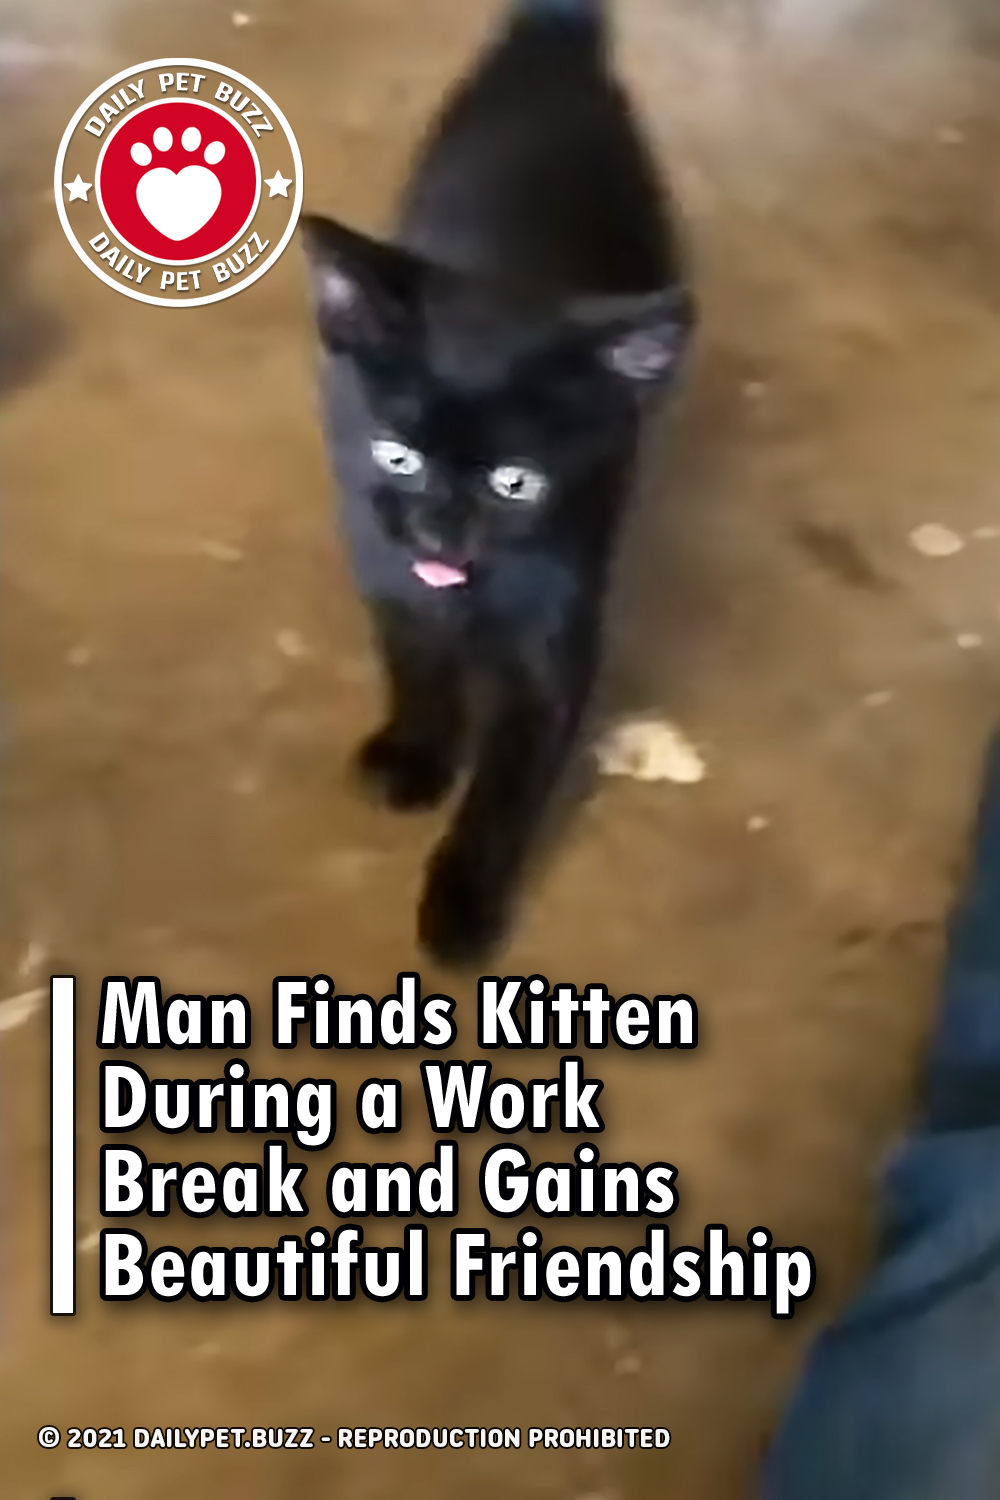 Man Finds Kitten During a Work Break and Gains Beautiful Friendship